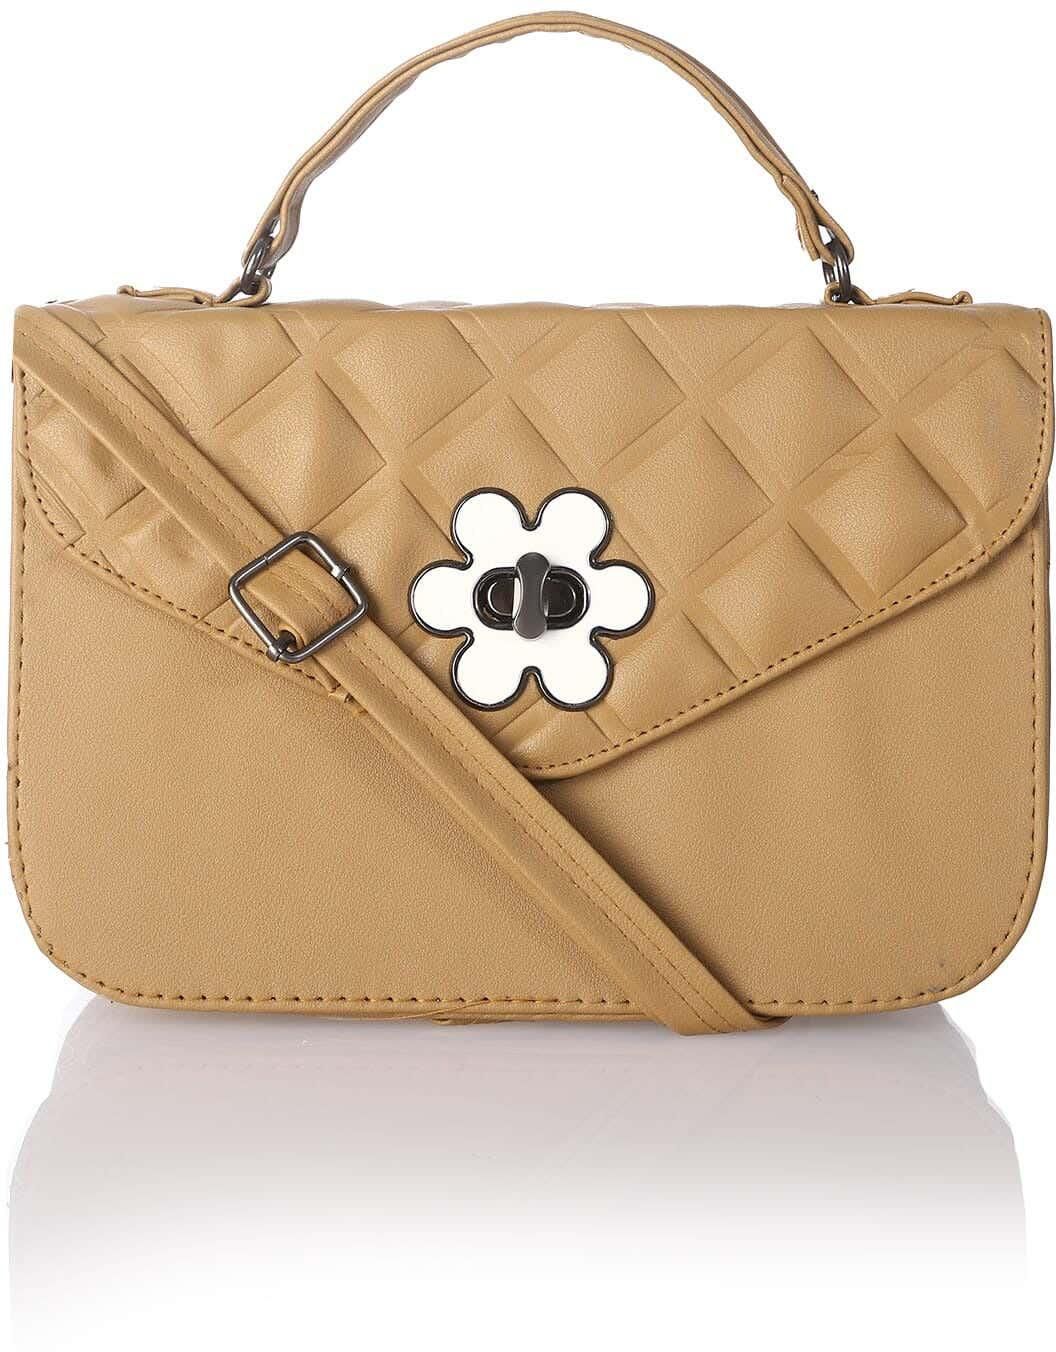 Get Ladies Leather Handbag, 20×15 cm - Brown with best offers | Raneen.com